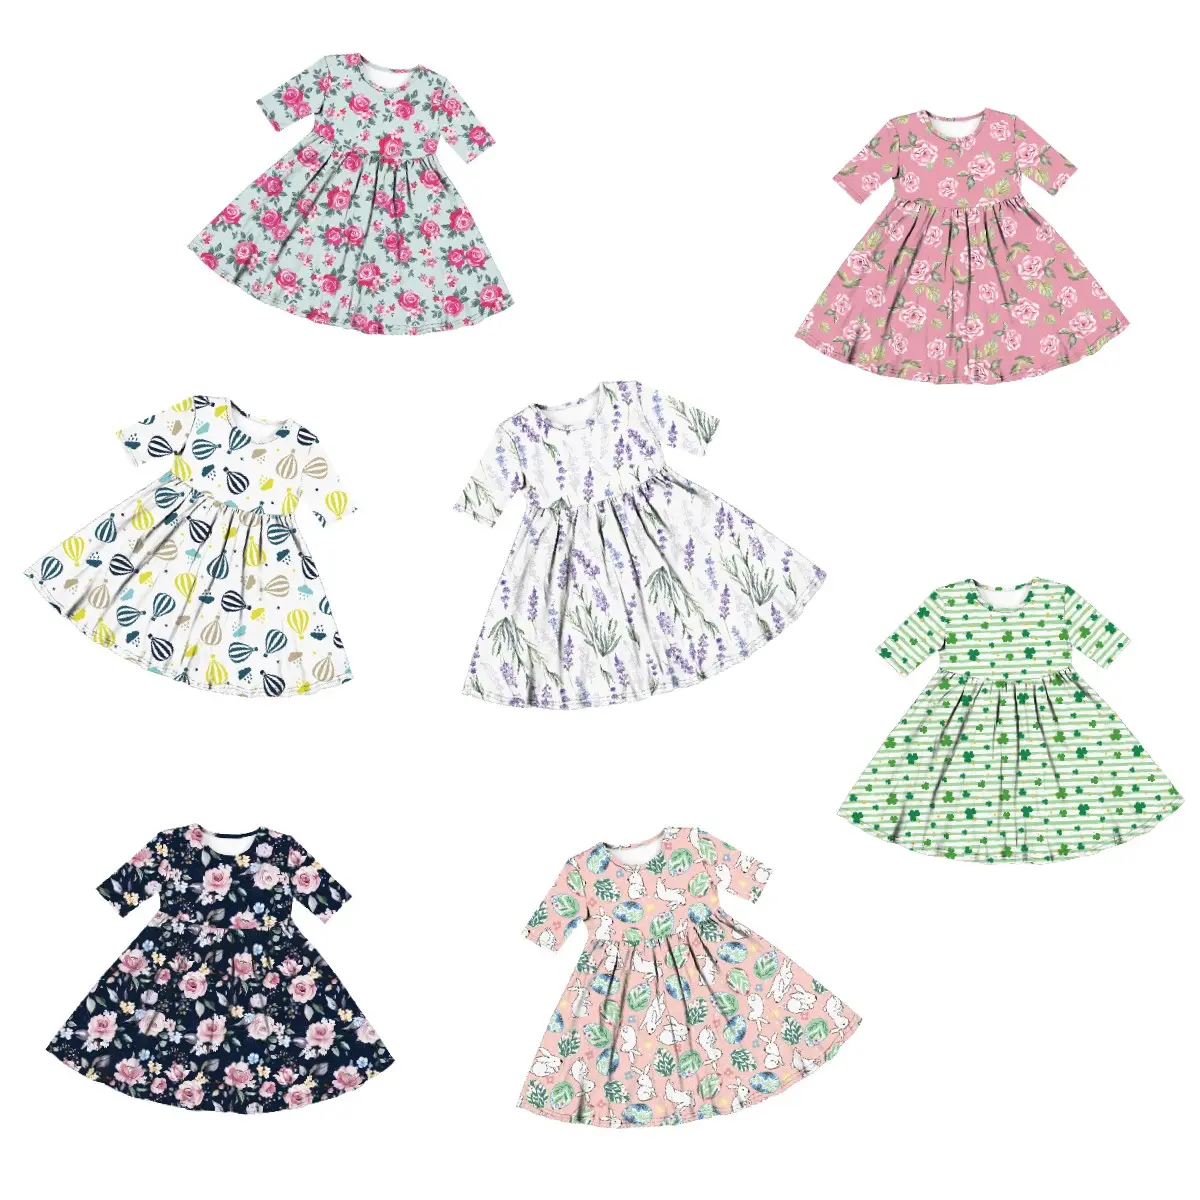 Yiwu Yiyuan Garment kids clothing for girls party dresses 7-8 years kids dresses for girls of 9 years old party dress for girl